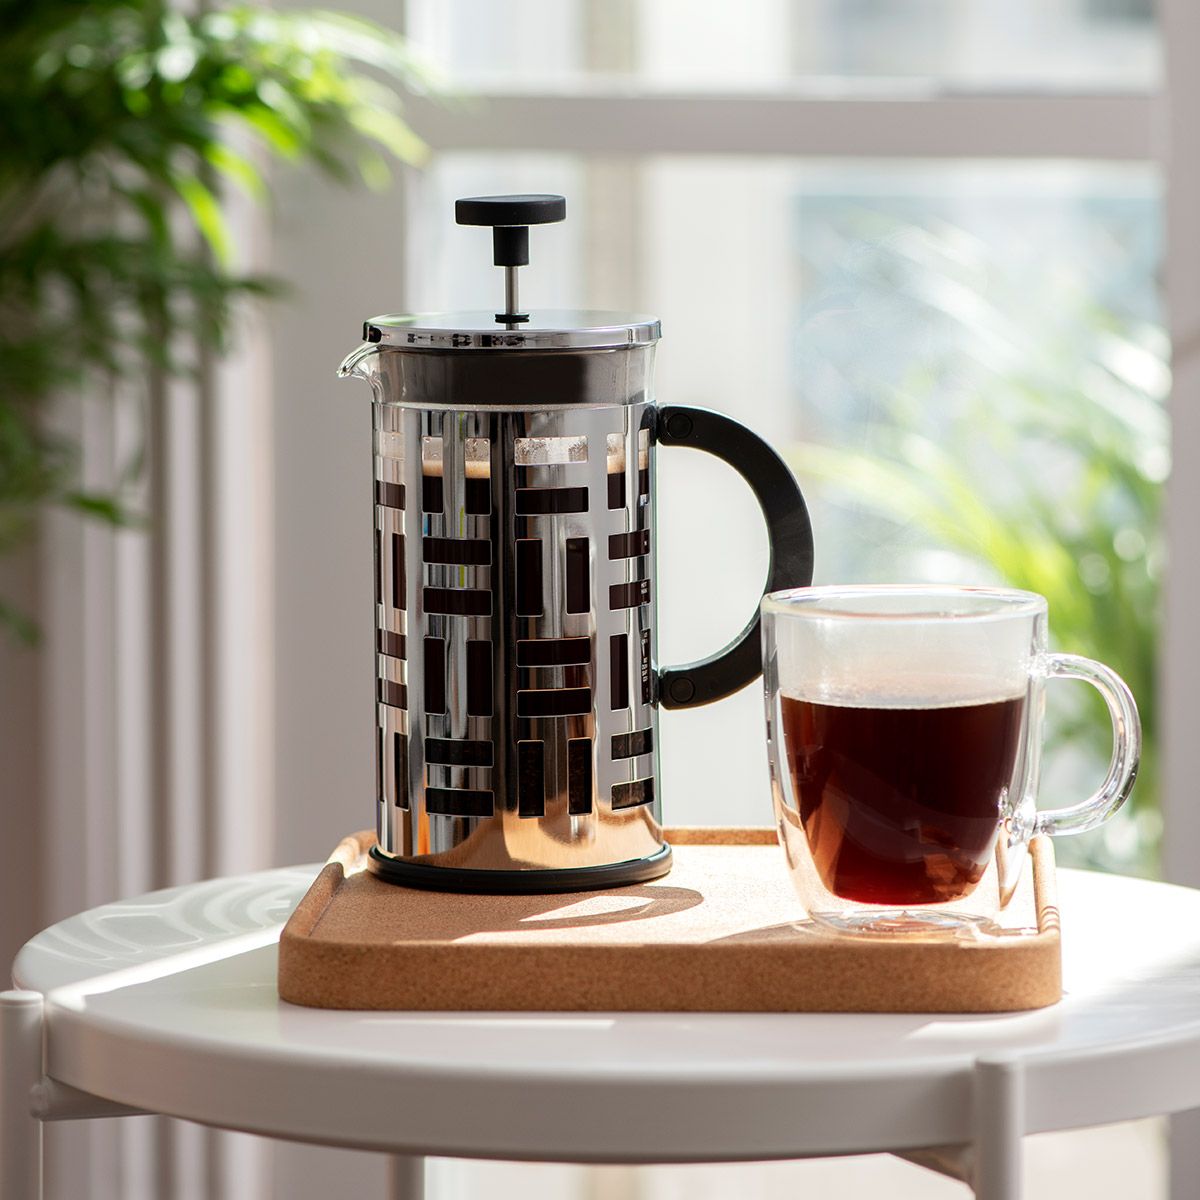 Bodum Eileen French Press coffee maker 8 cup 34 oz - Shiny